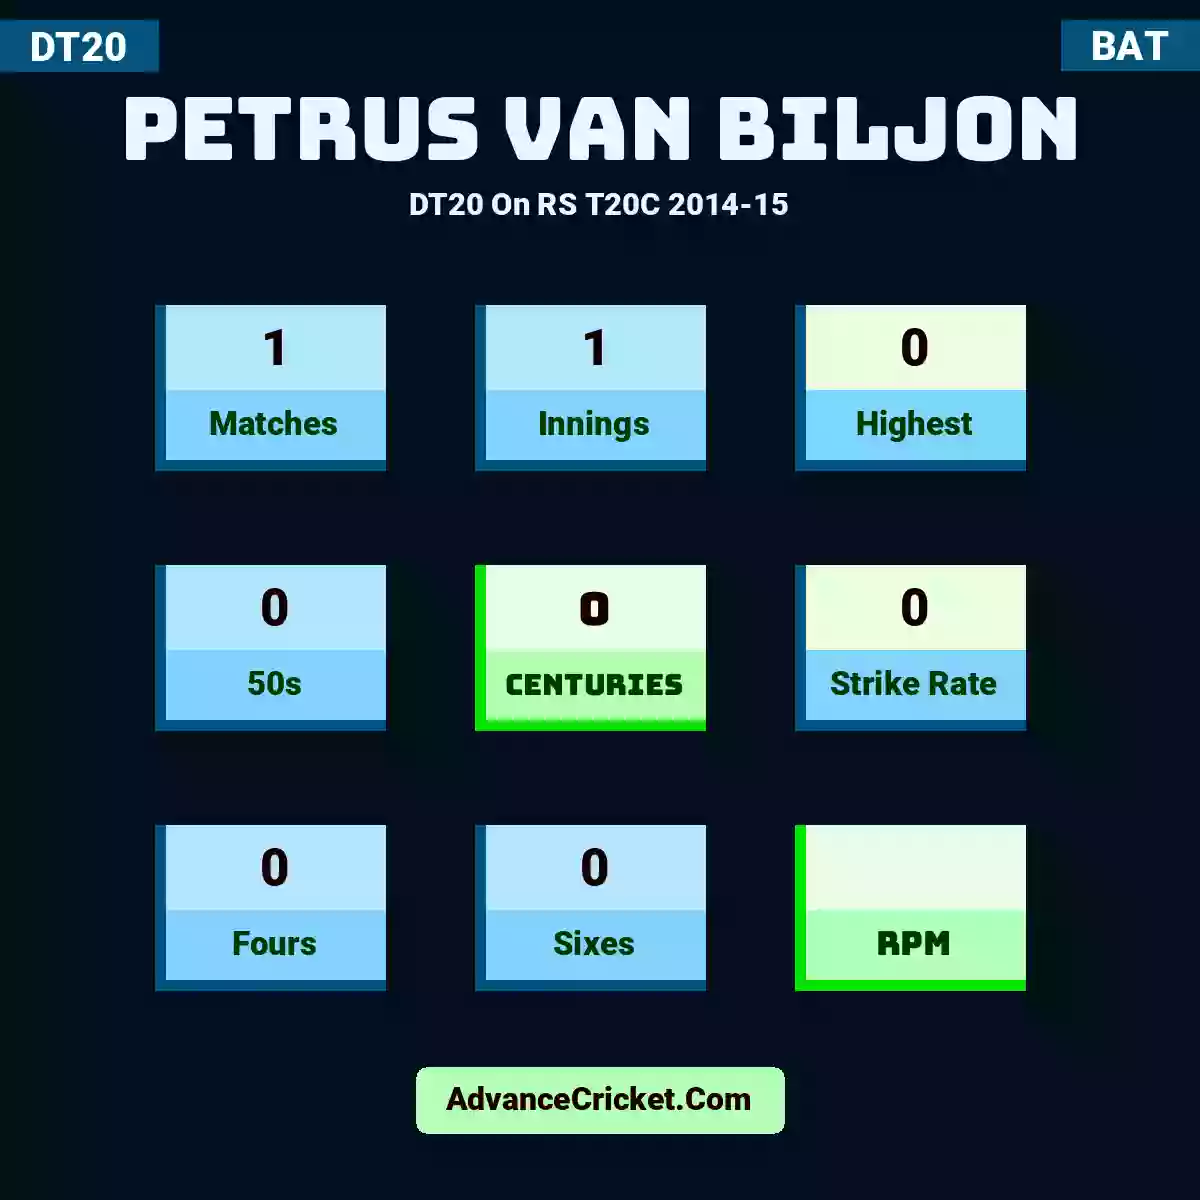 Petrus van Biljon DT20  On RS T20C 2014-15, Petrus van Biljon played 1 matches, scored 0 runs as highest, 0 half-centuries, and 0 centuries, with a strike rate of 0. P.Biljon hit 0 fours and 0 sixes.